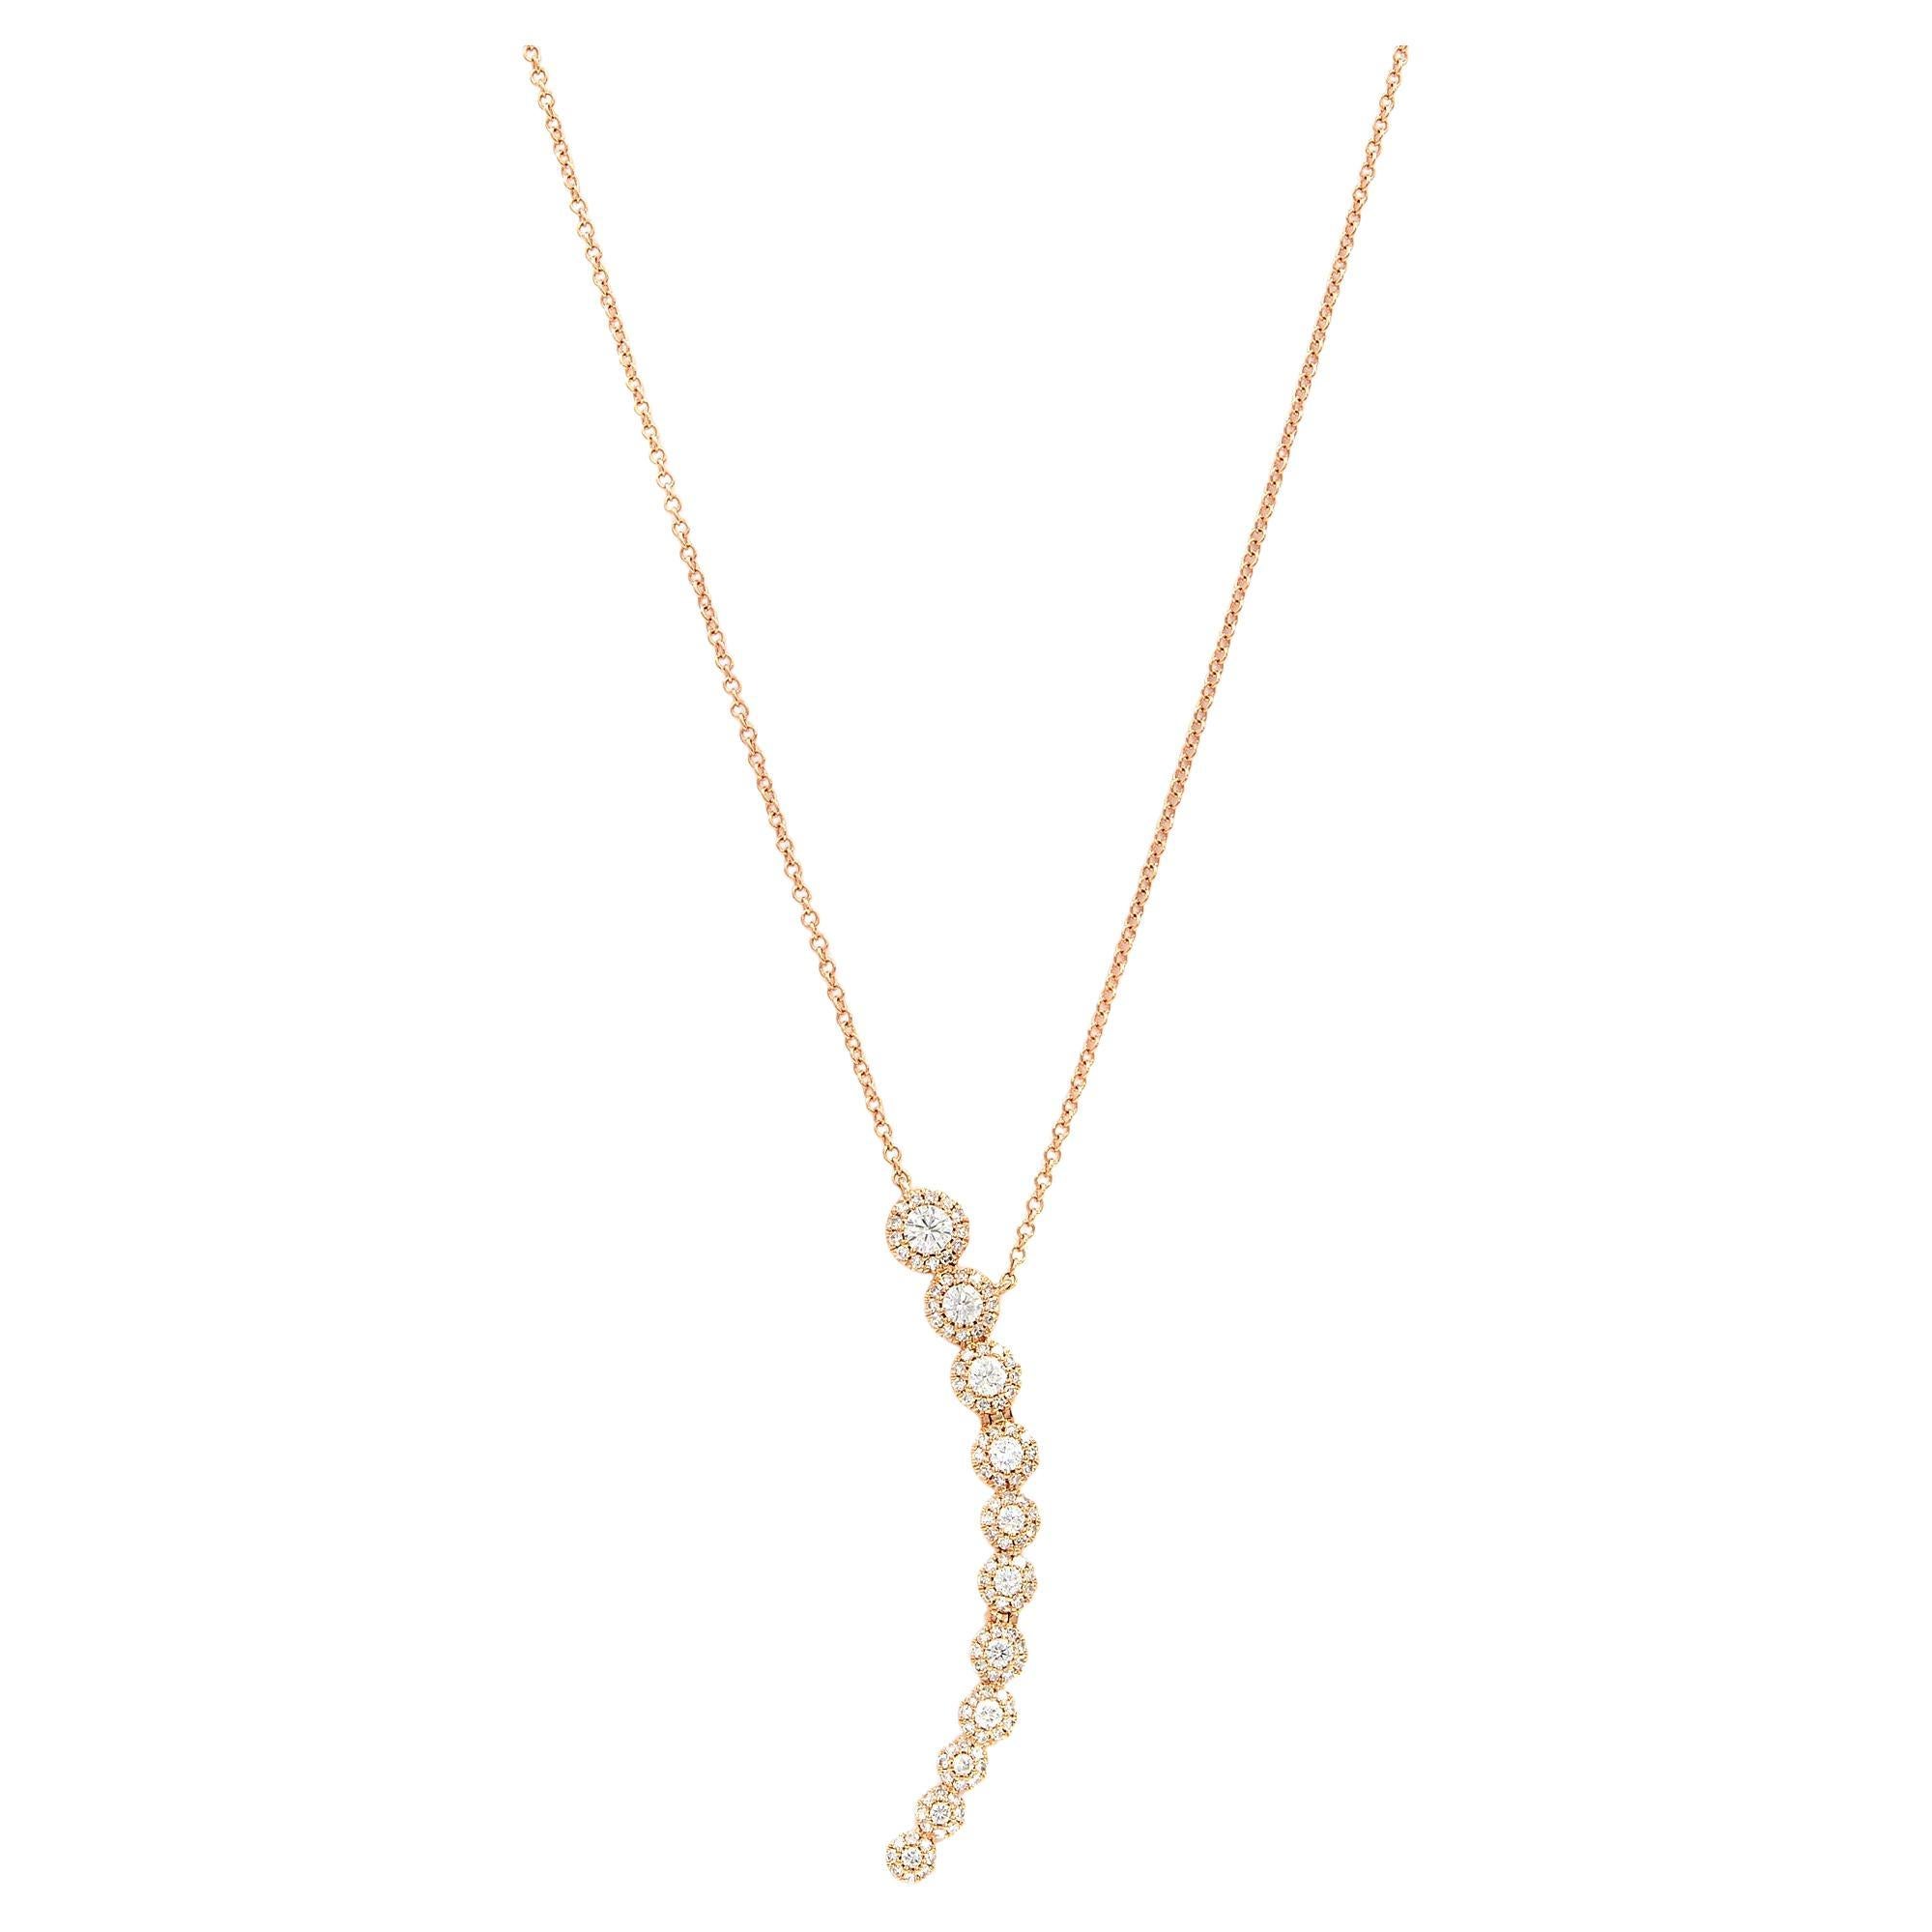 Rachel Koen Crescent Pendant Necklace 14K Rose Gold 0.63 Cttw For Sale